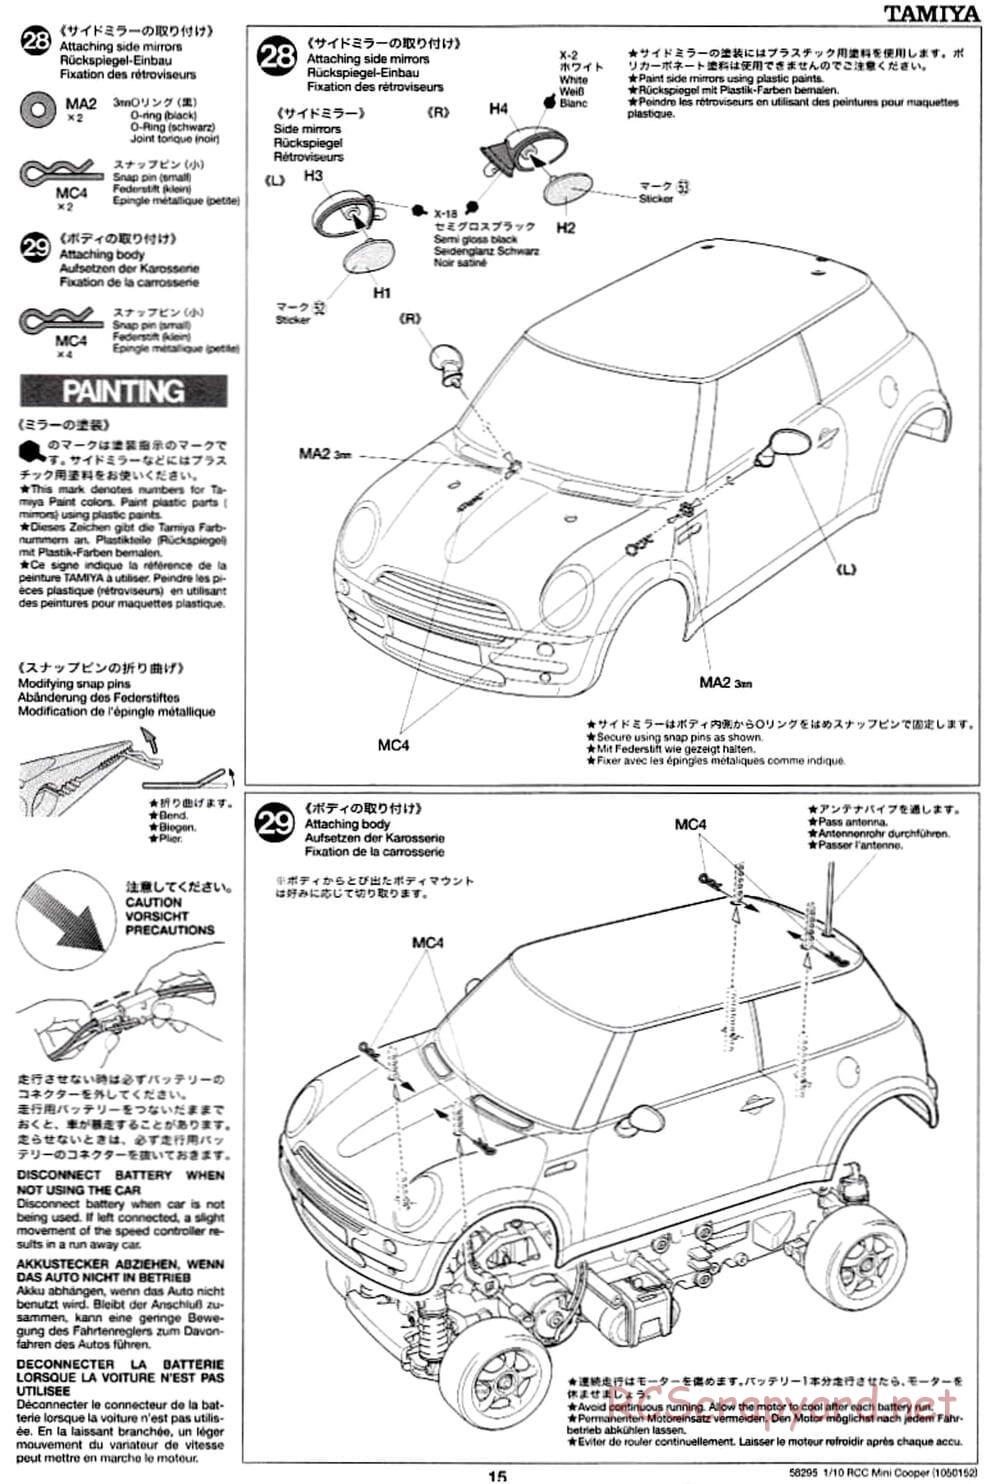 Tamiya - Mini Cooper - M03L Chassis - Manual - Page 14